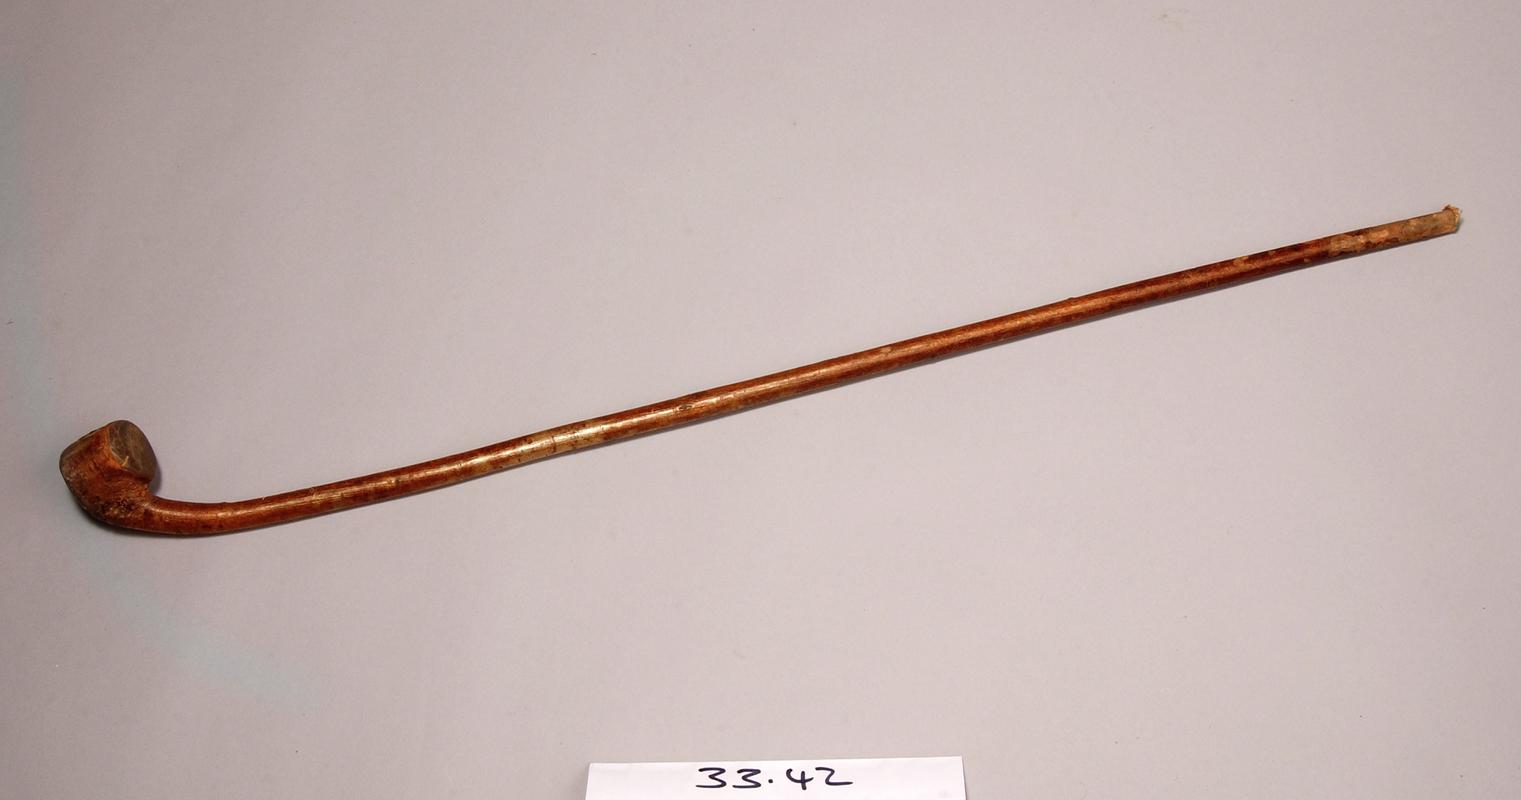 Mari Lwyd stick (acc no incorrect on image)